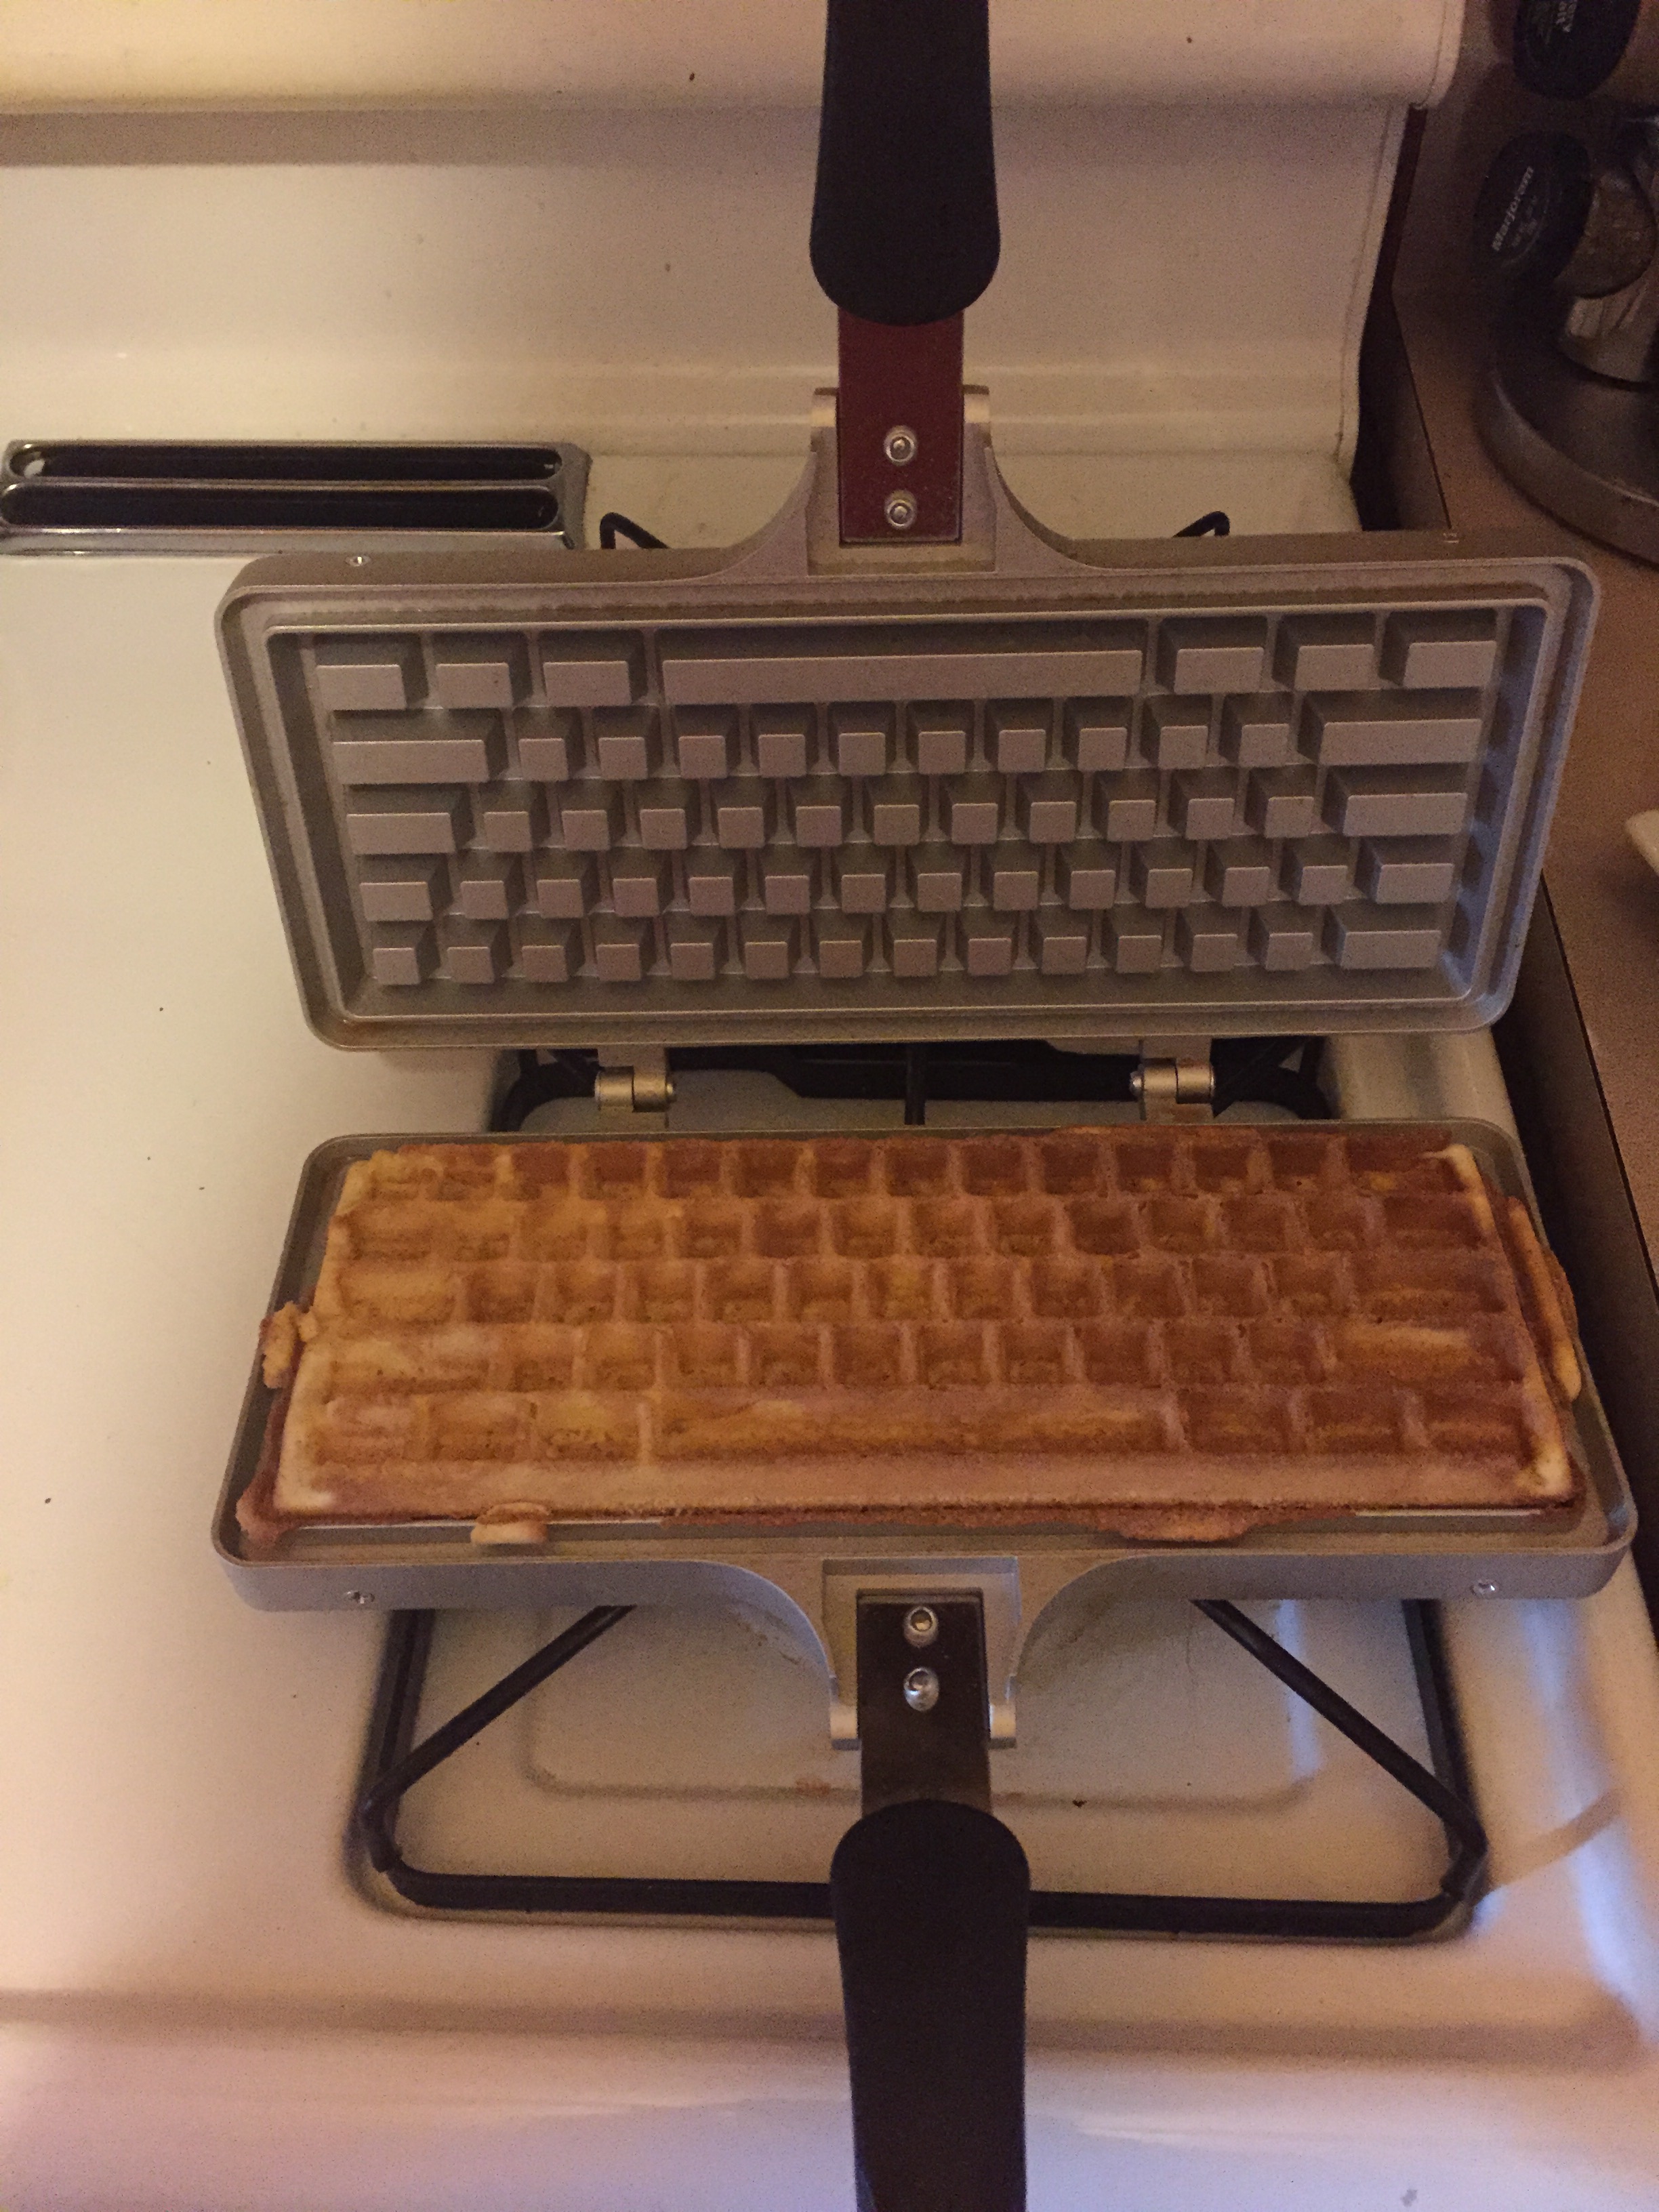 Finished Waffles Look Like A Computer Keyboard! 